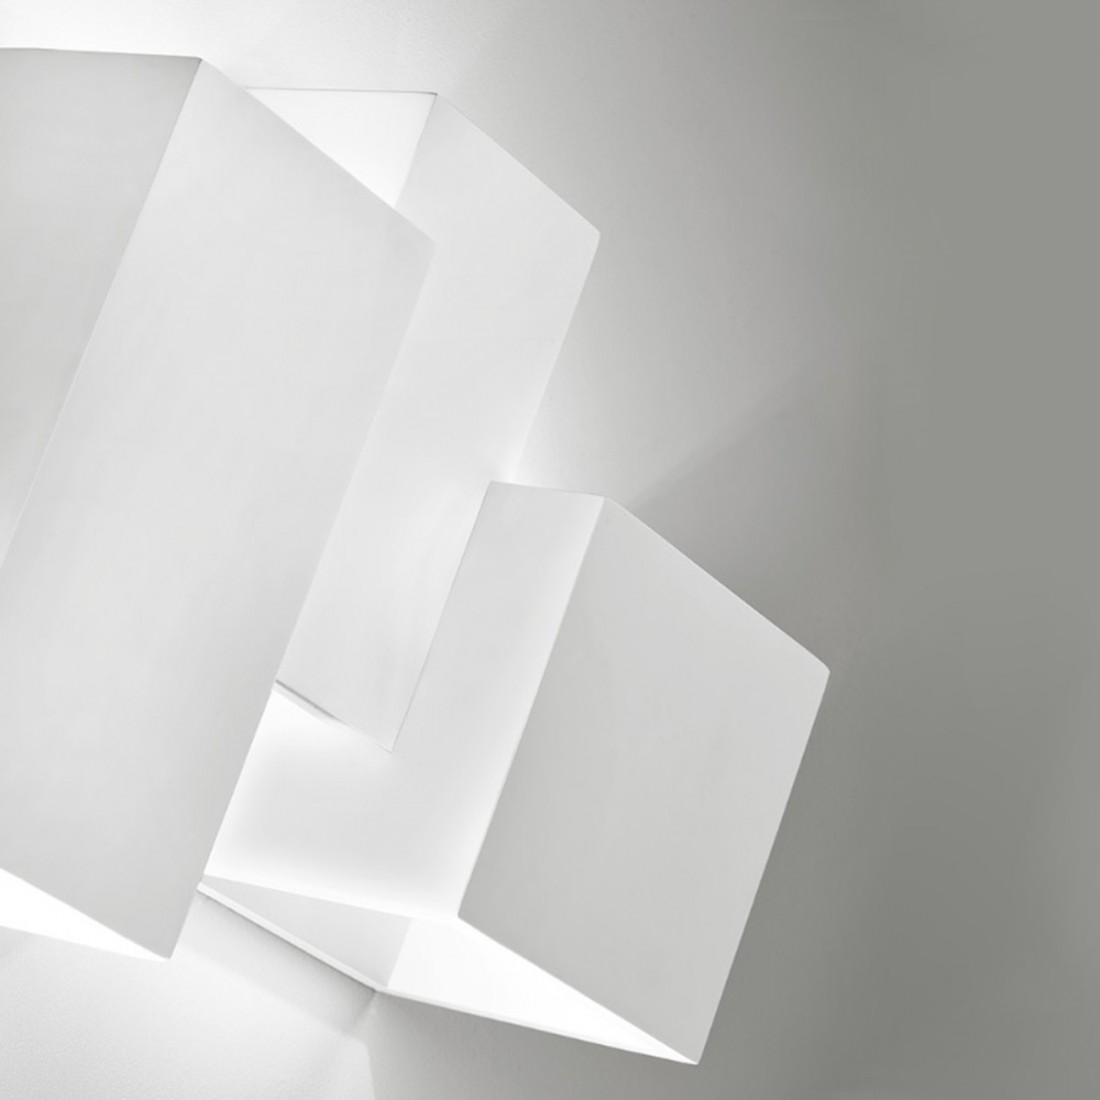 Applique SF-HERAEA T205 G9 LED gesso biemissione lampada parete moderna parallelepipedo multiluce interno